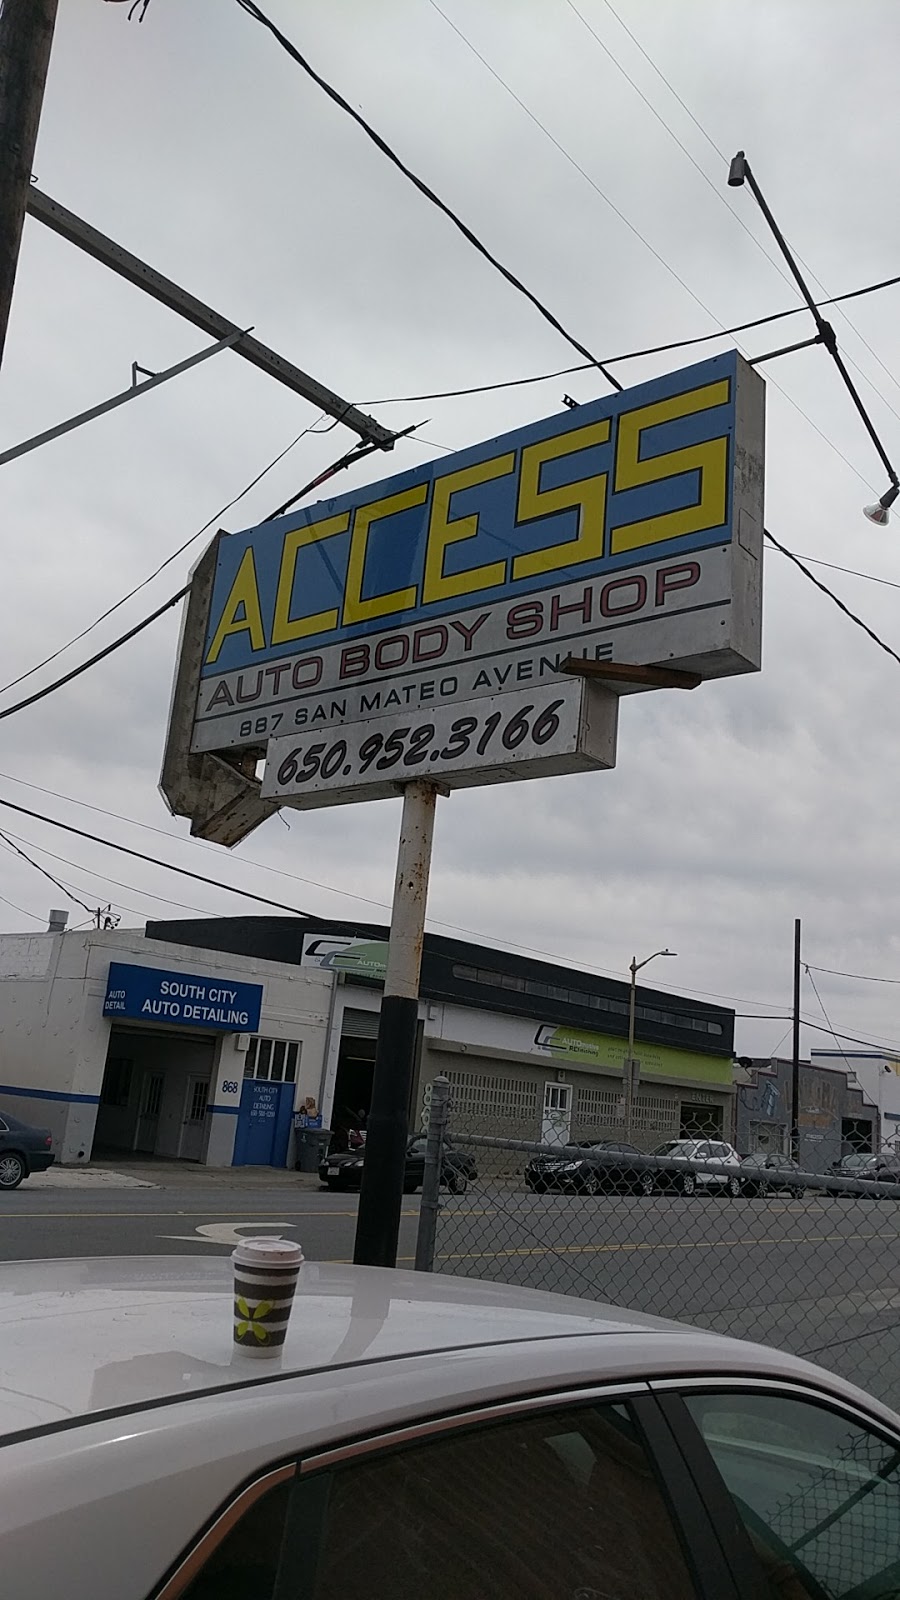 Access Auto Body Shop | 887 San Mateo Ave, San Bruno, CA 94066 | Phone: (650) 952-3166